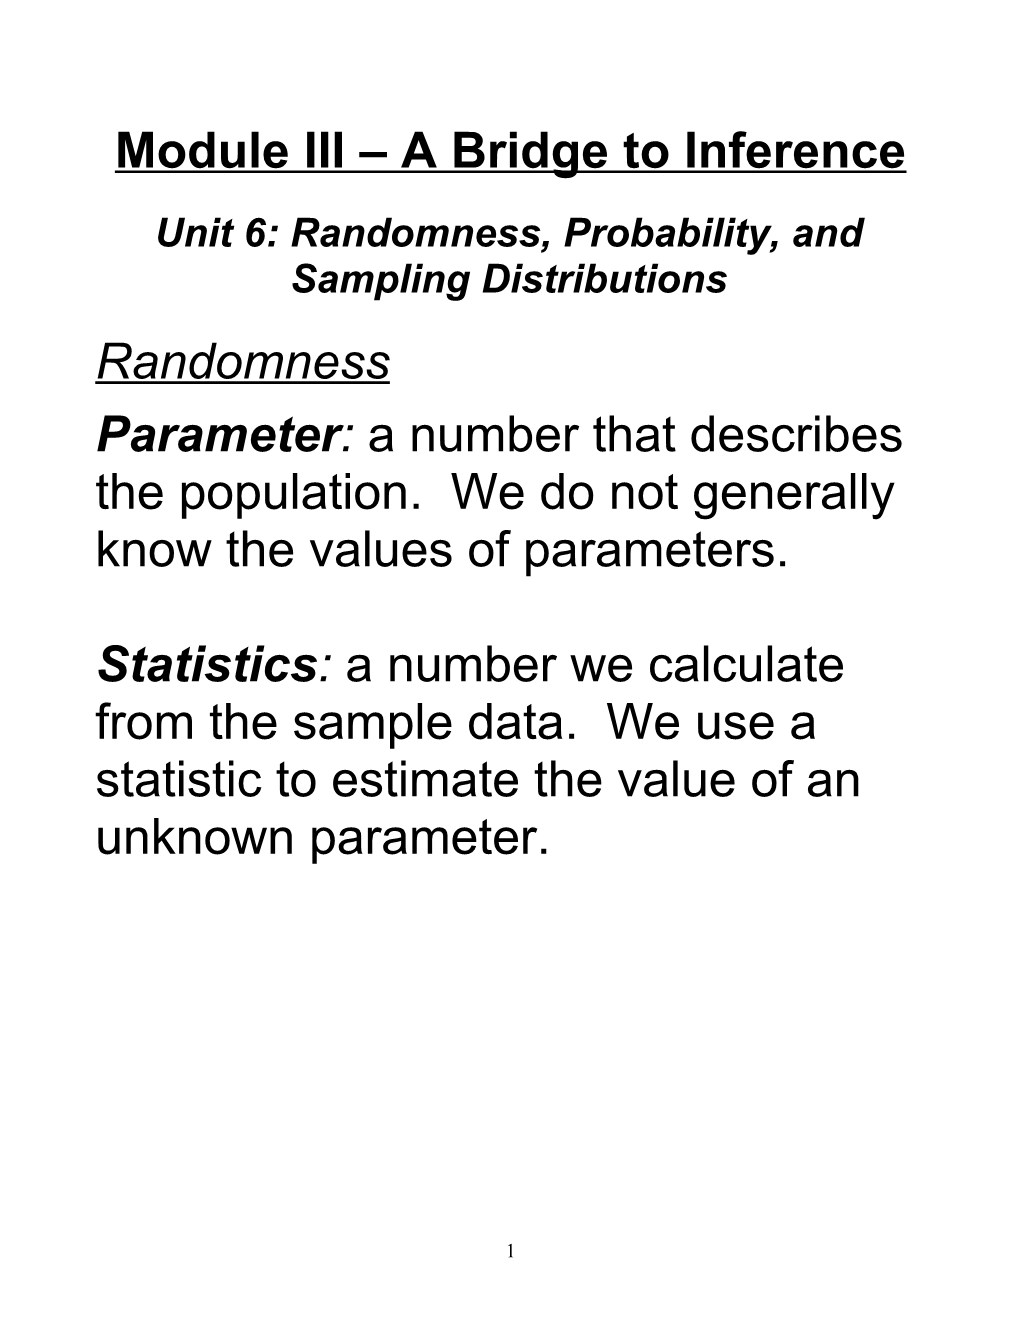 Unit 6: Randomness, Probability, and Sampling Distributions